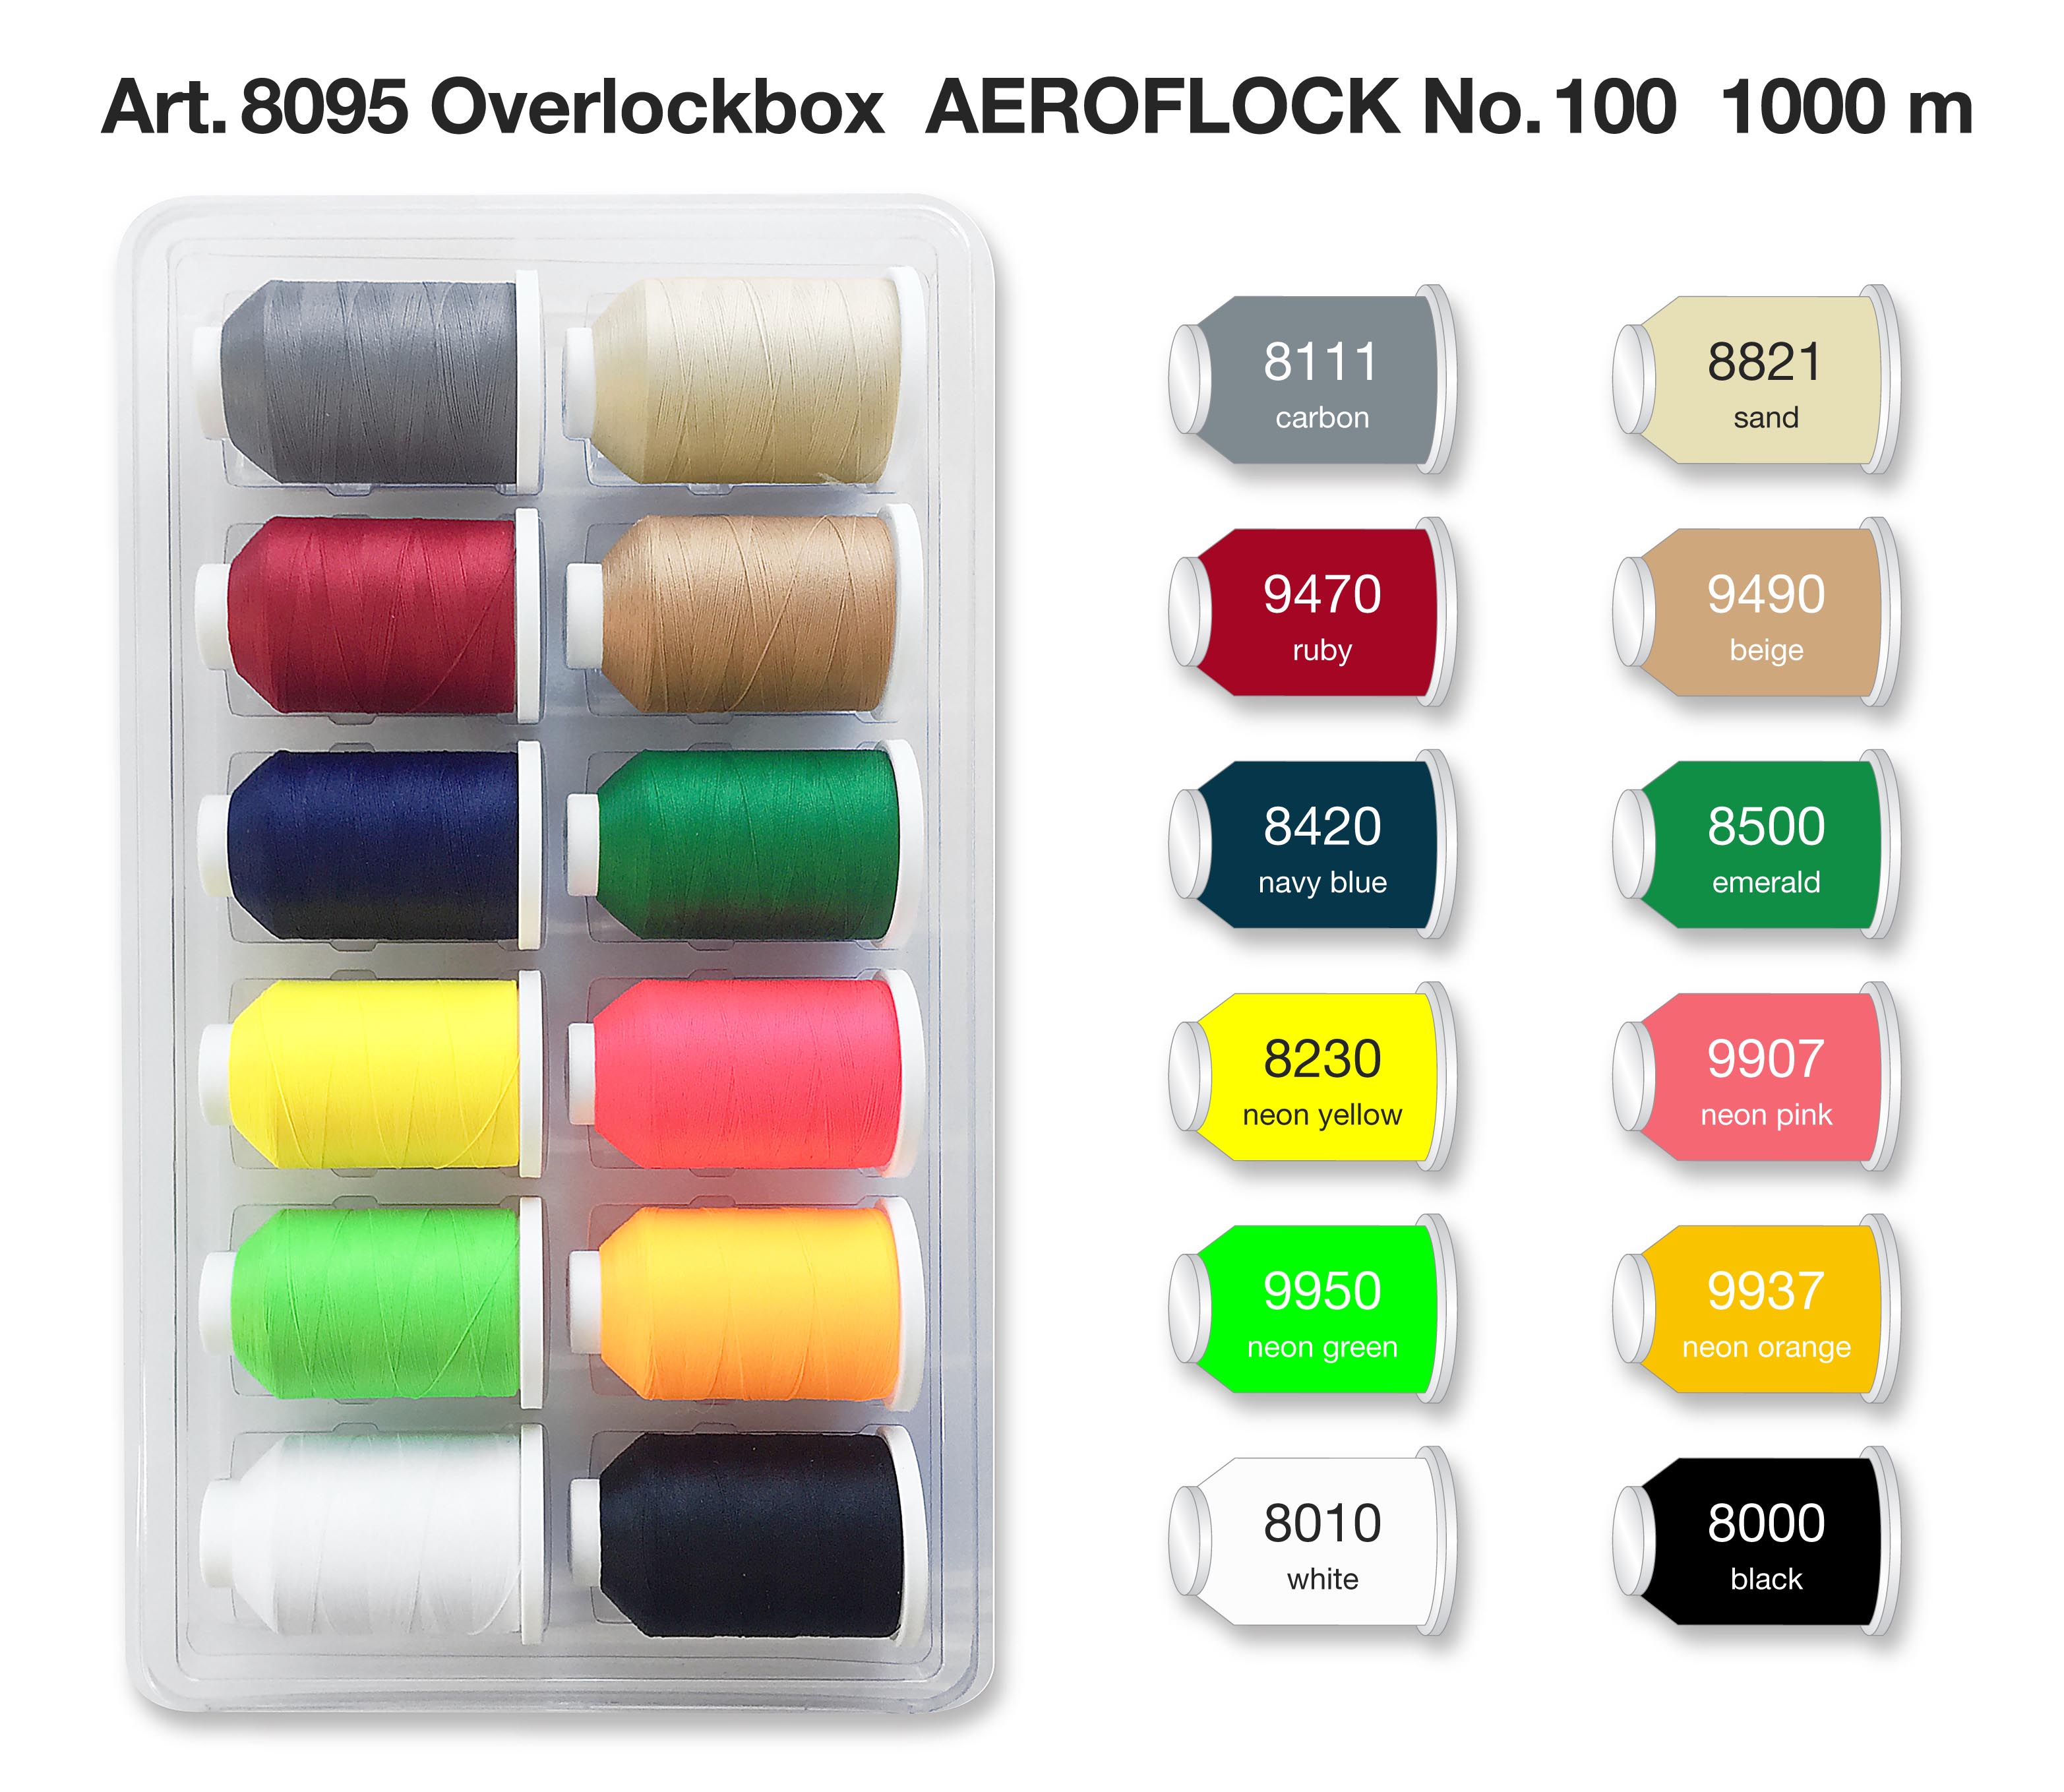  Набор однотонных ниток Madeira AeroFlock № 100, Blister Box (арт. 8095), 12×1000 м